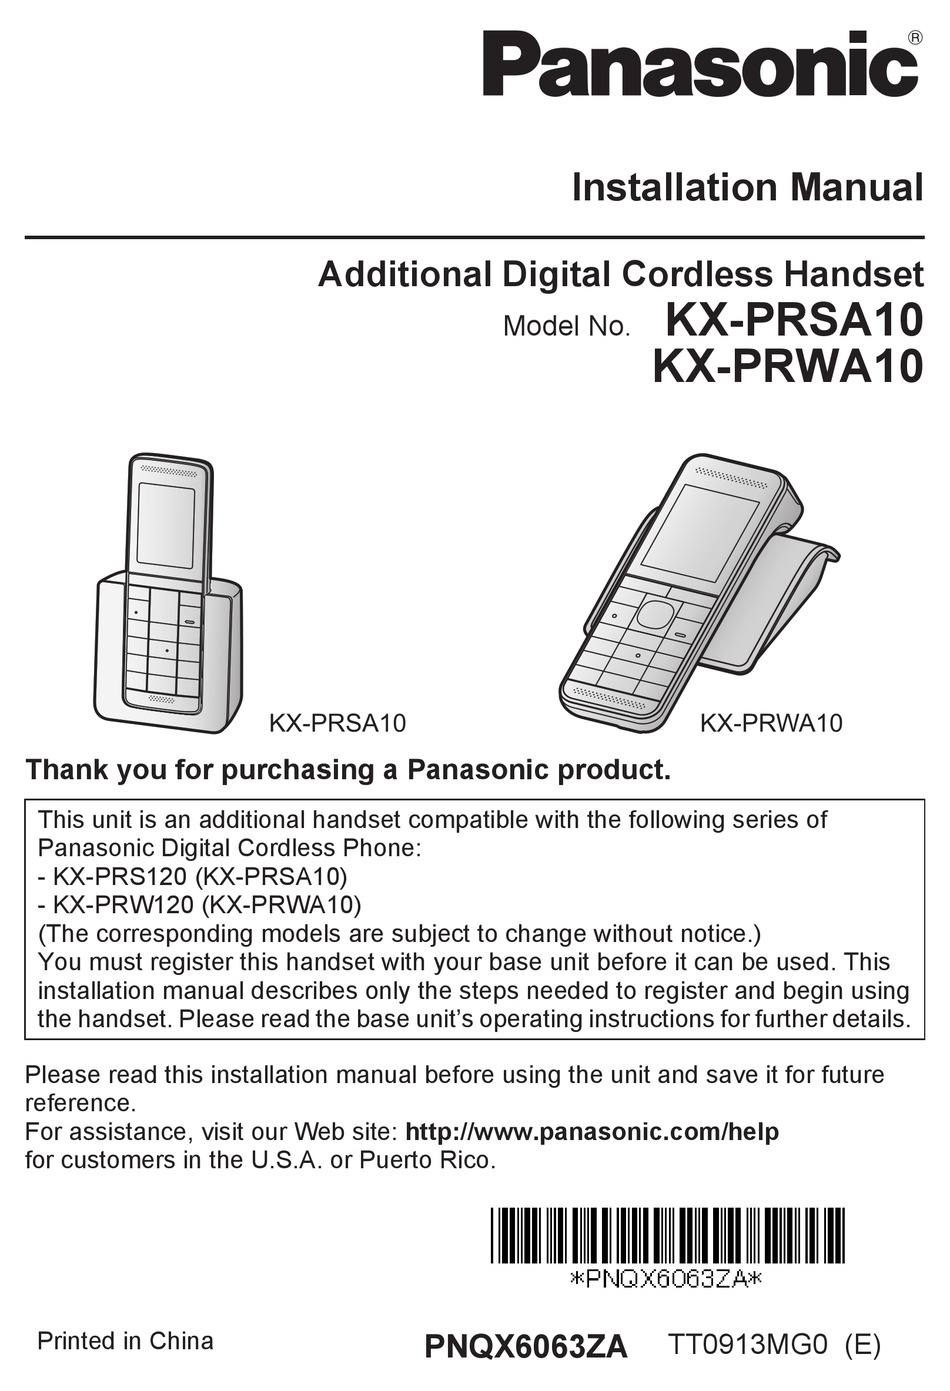 PANASONIC KX-PRSA10 INSTALLATION MANUAL Pdf Download | ManualsLib